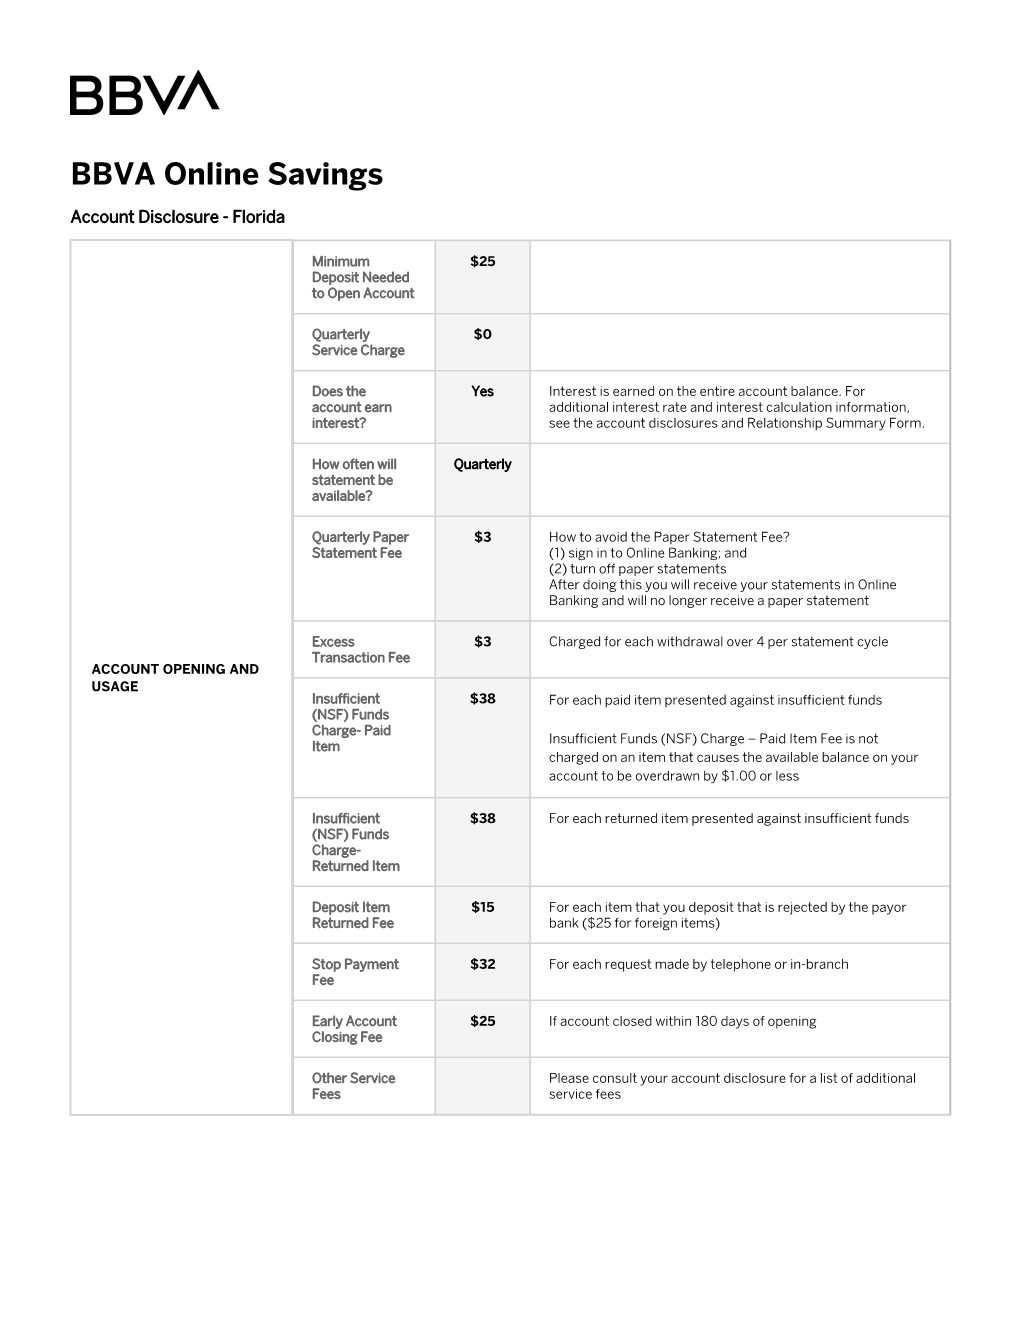 Online Savings Account: Florida | BBVA